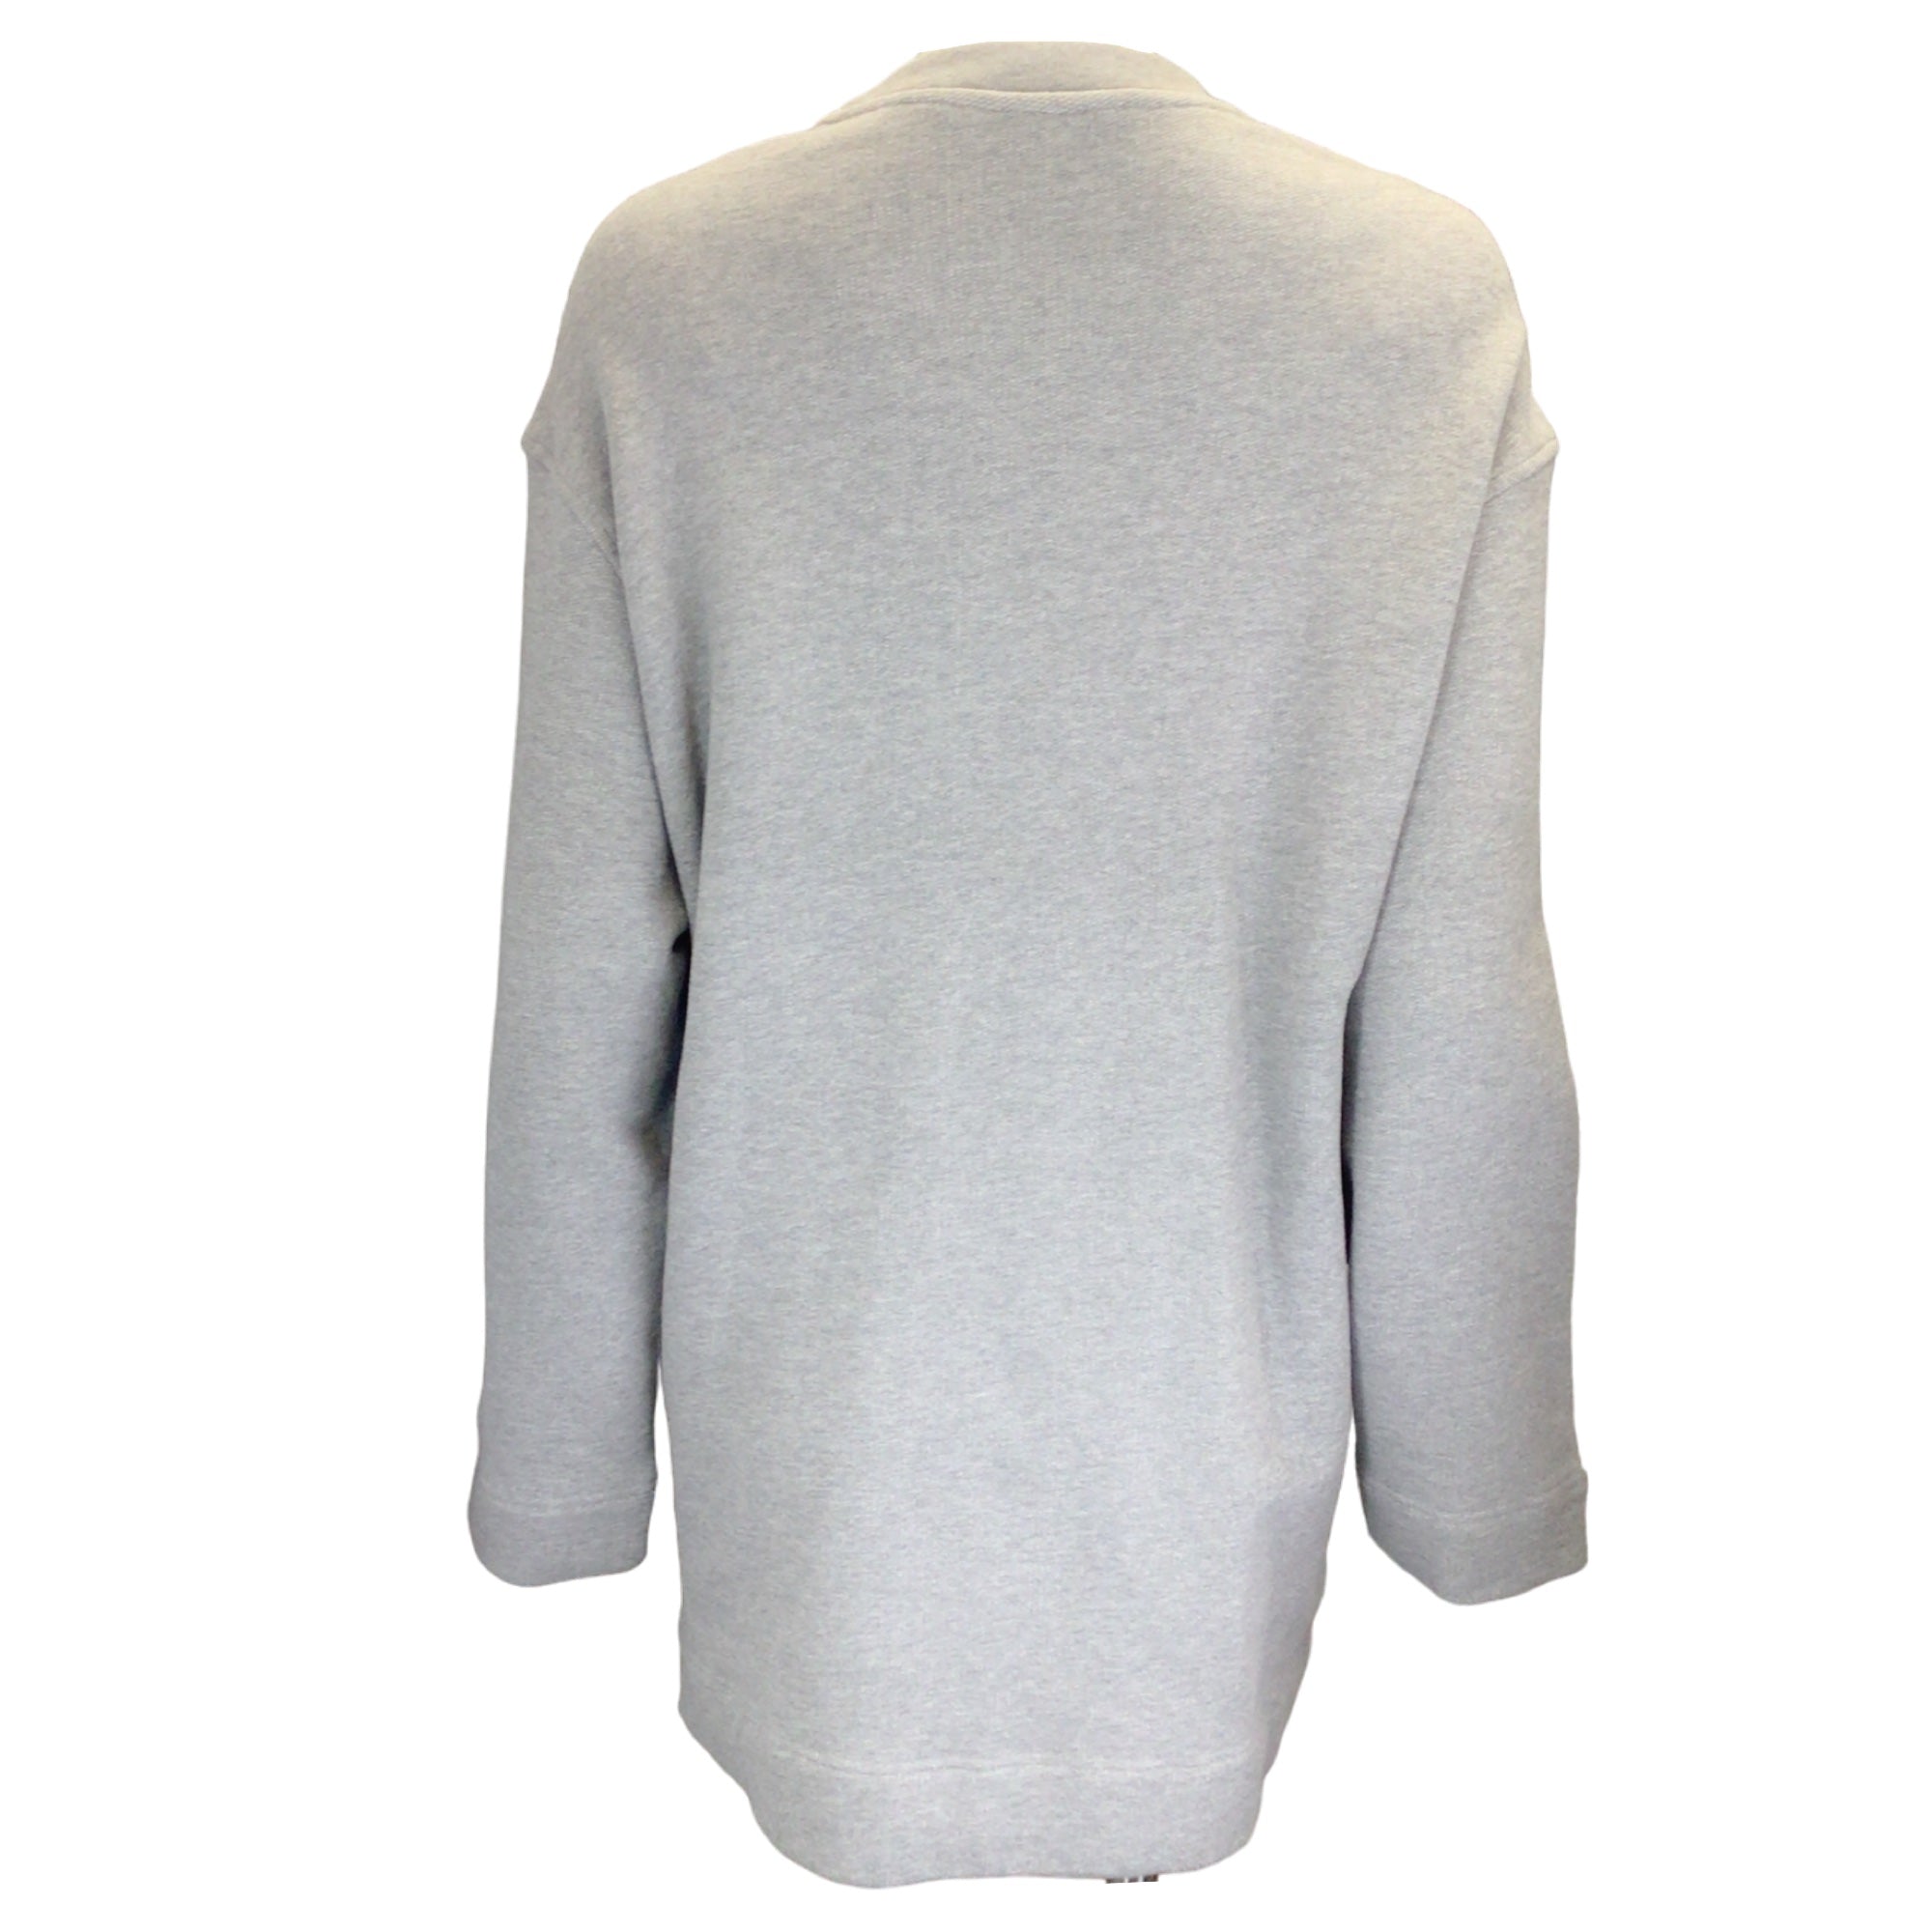 Dries Van Noten Grey / Silver Ring Detail Long Sleeved Cotton Sweatshirt Dress